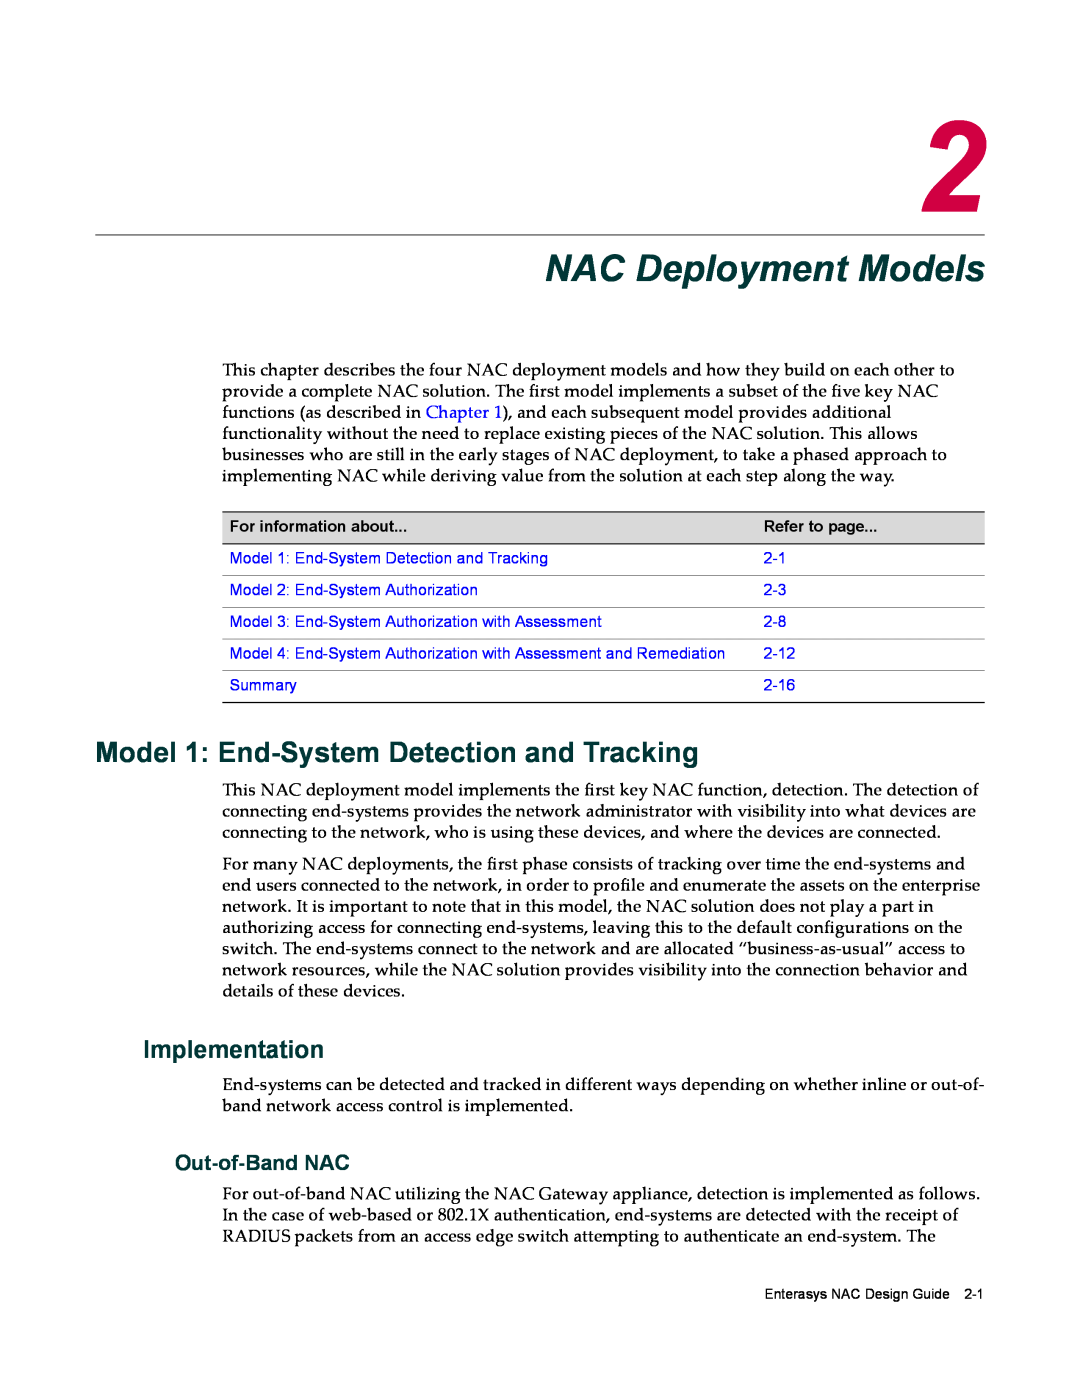 Enterasys Networks 9034385 manual NAC Deployment Models, Model 1 End-System Detection and Tracking, Implementation 